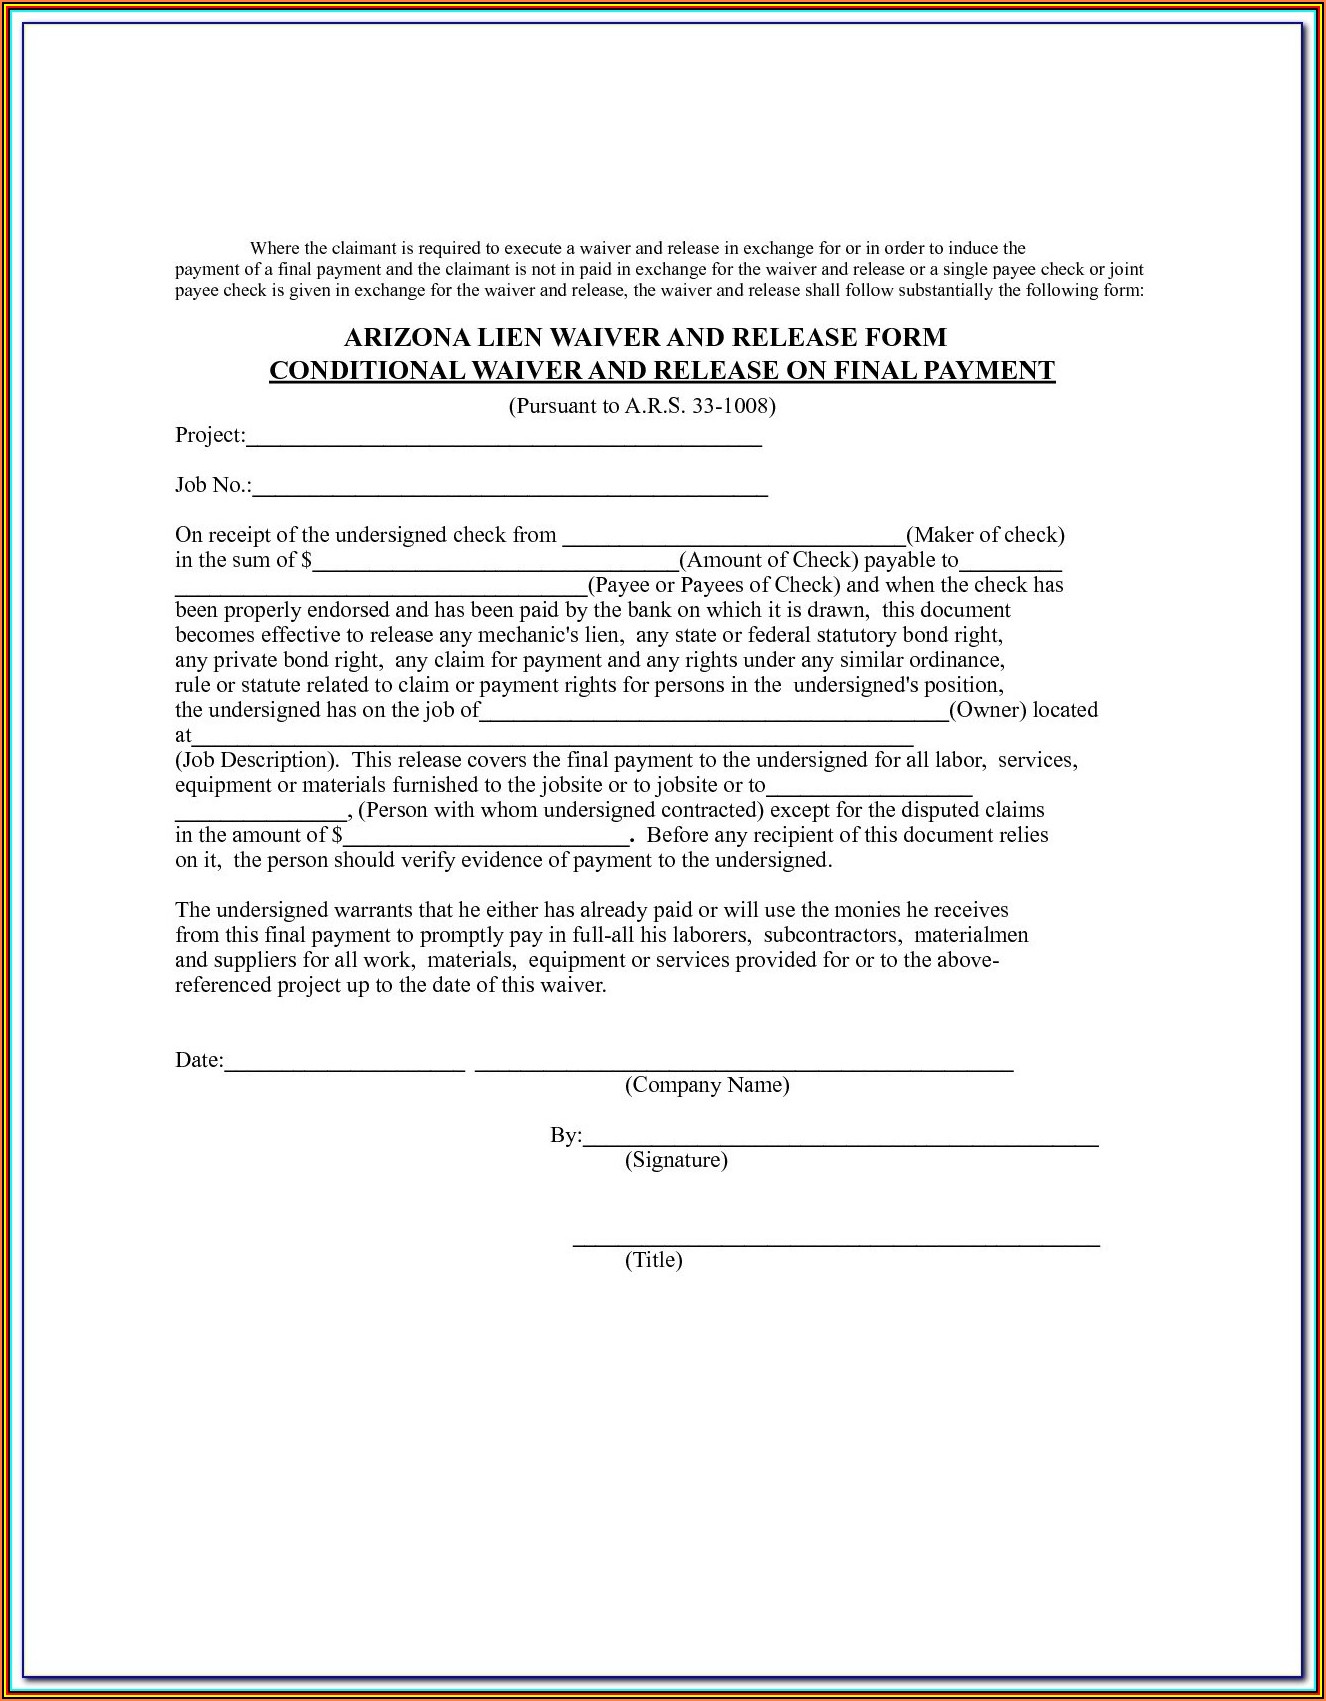 Subcontractor Affidavit Form California